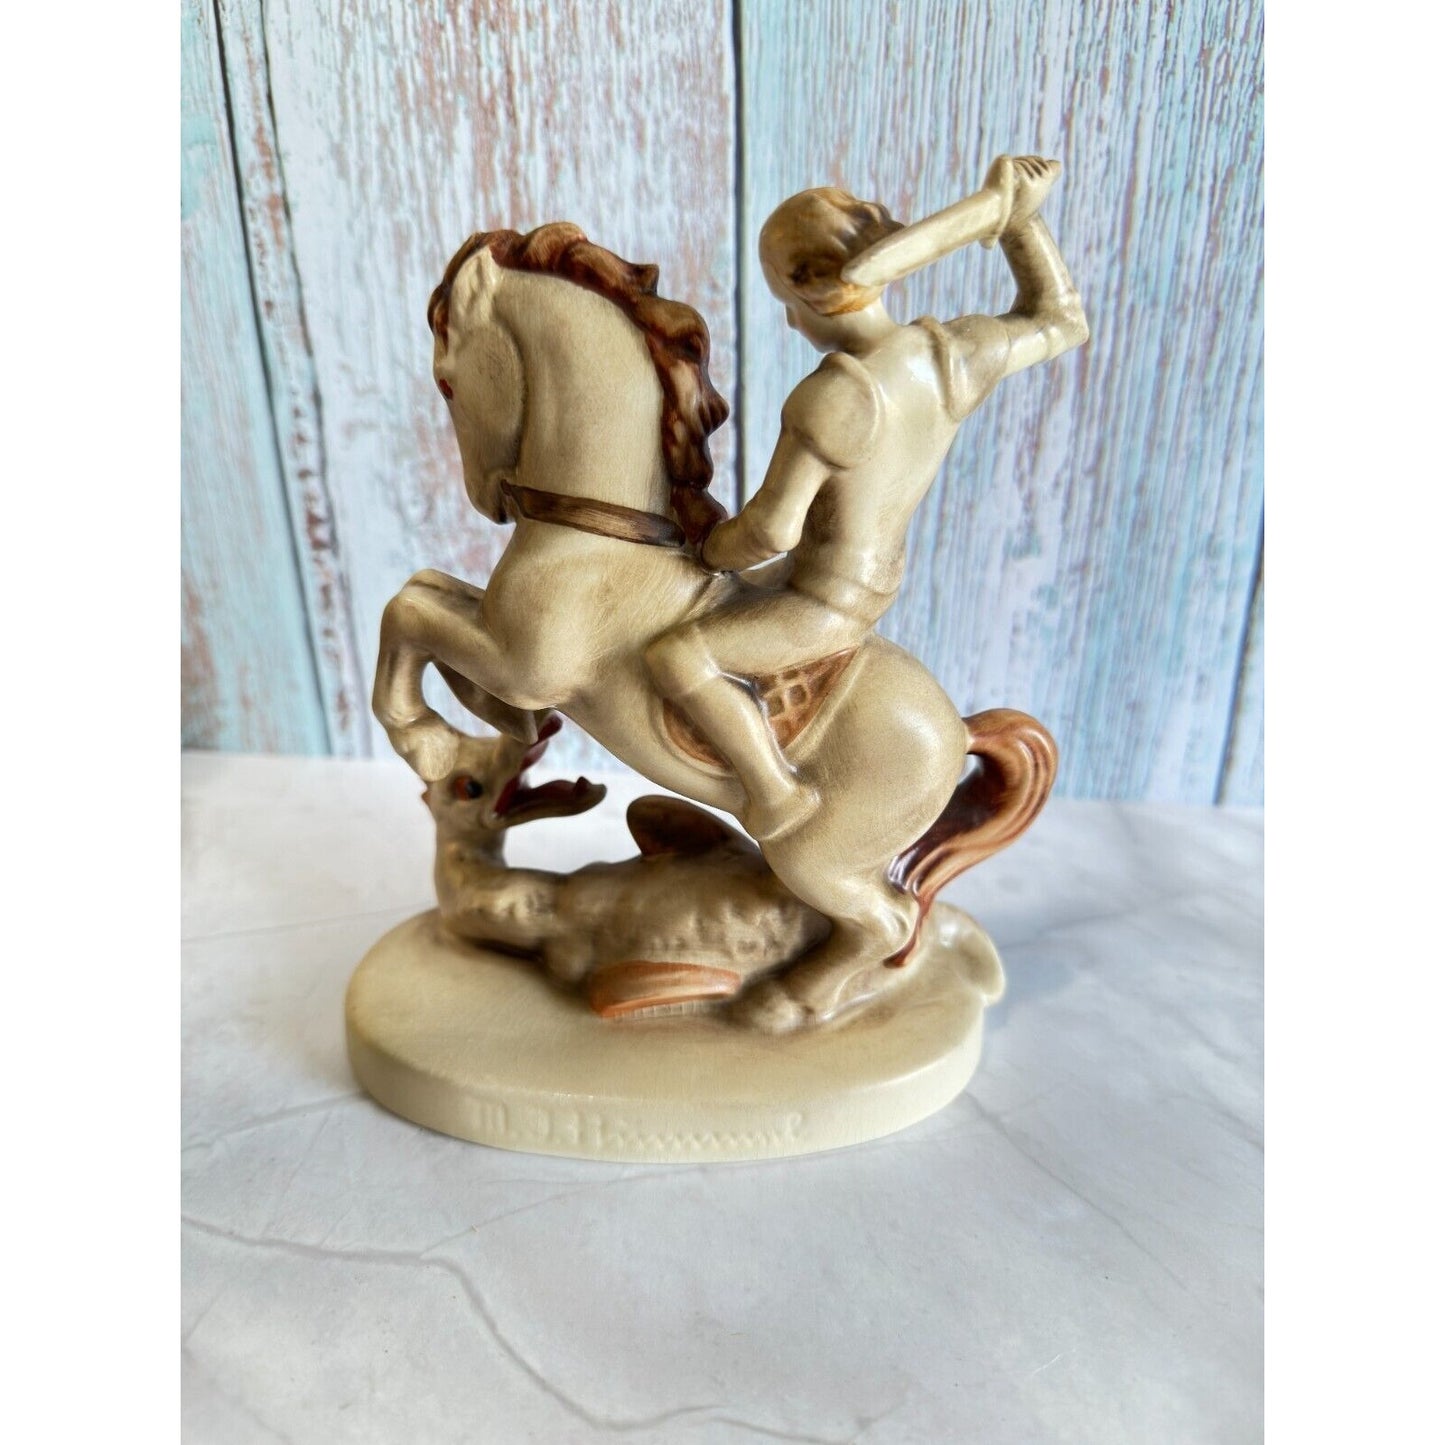 Goebel Hummel Figurine "St. George Slays the Dragon" #55 Porcelain Figurine